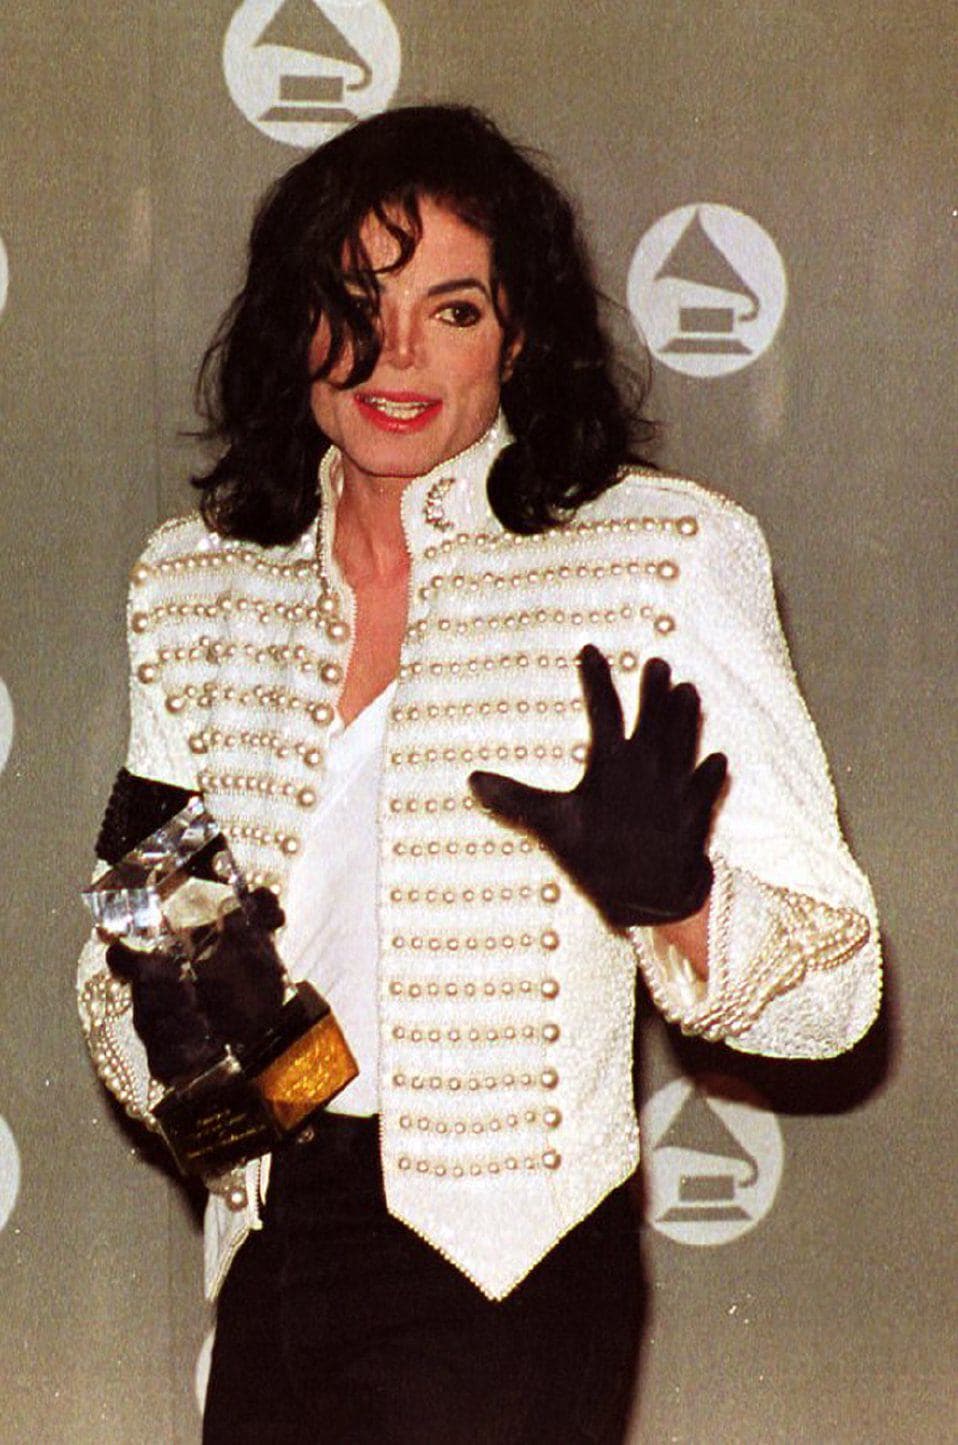 Febbraio 1993. Michael Jackson riceve il Grammy Legend Award durante la 36° edizione dei Grammy Awards a Los Angeles